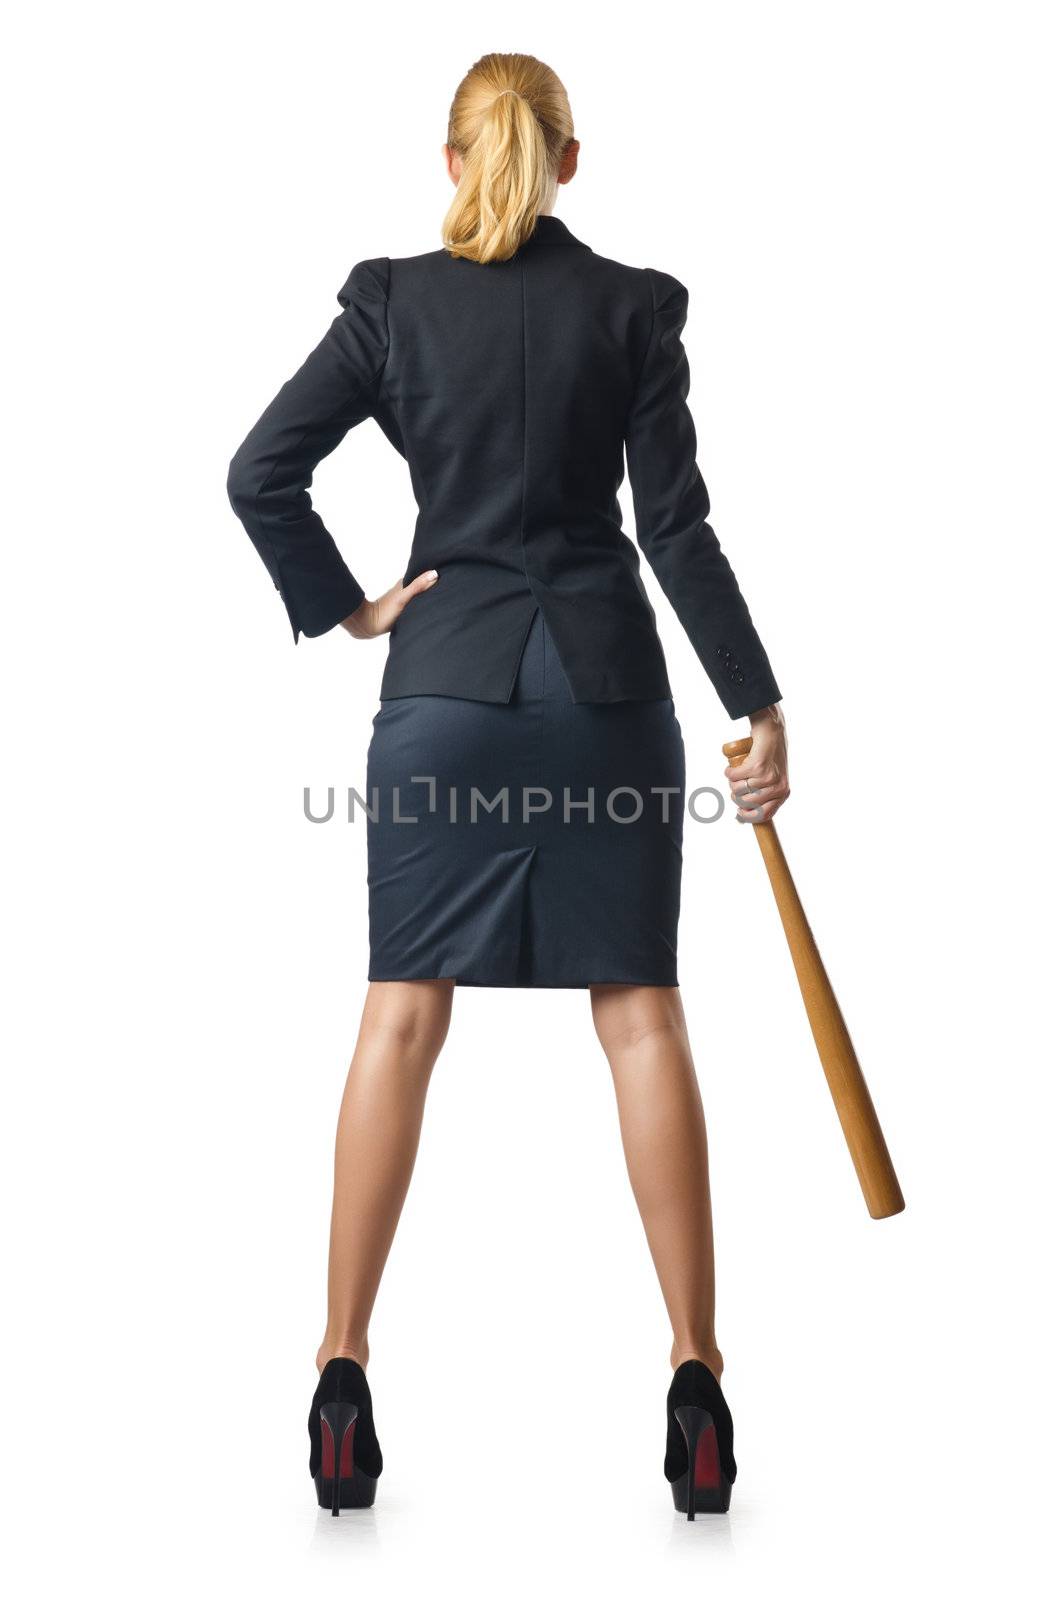 Businesswoman with baseball bat on white by Elnur